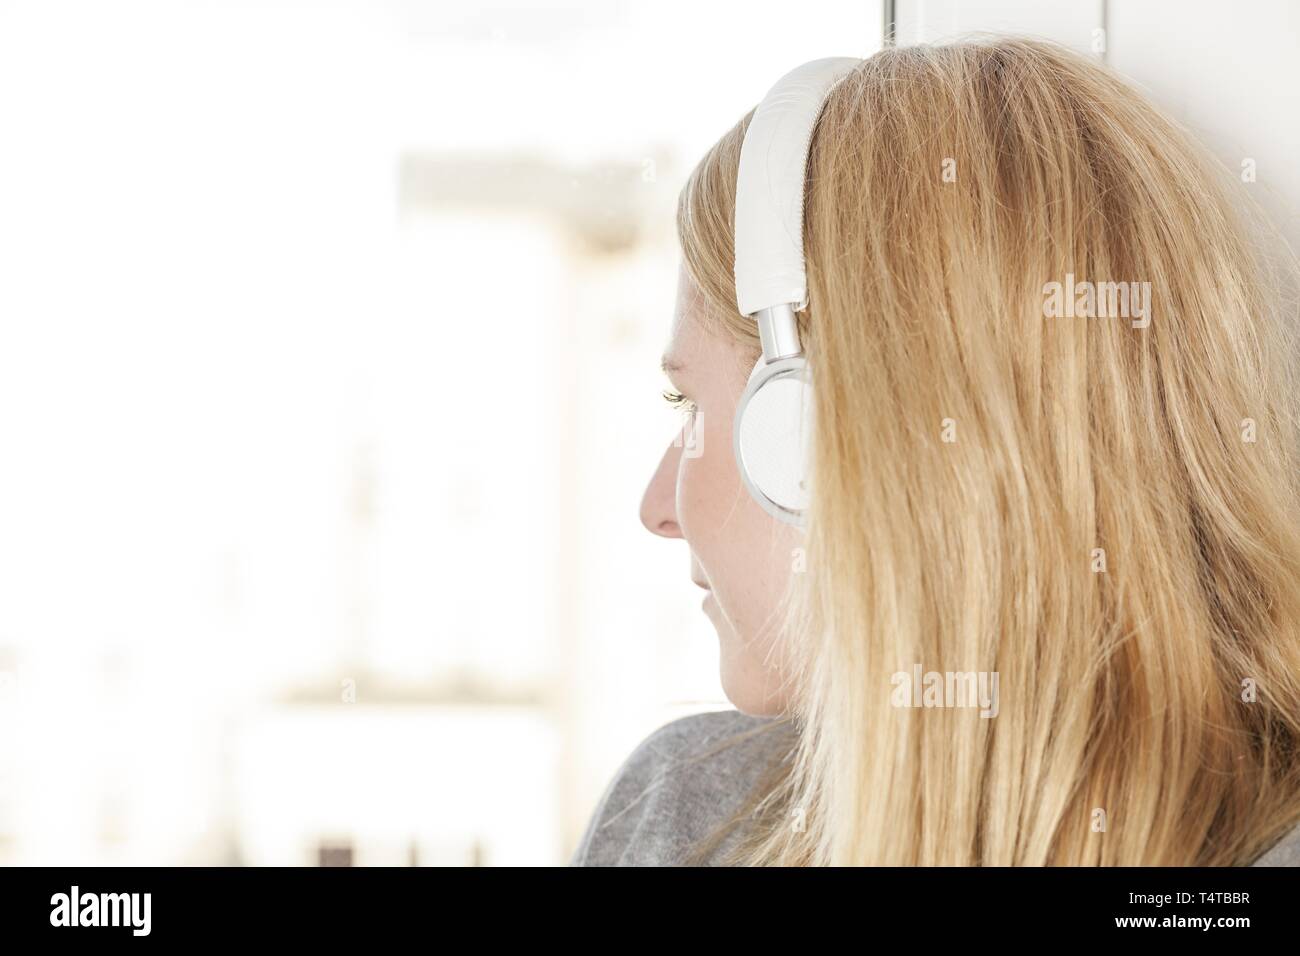 Blonde, pensive woman with headphones Stock Photo